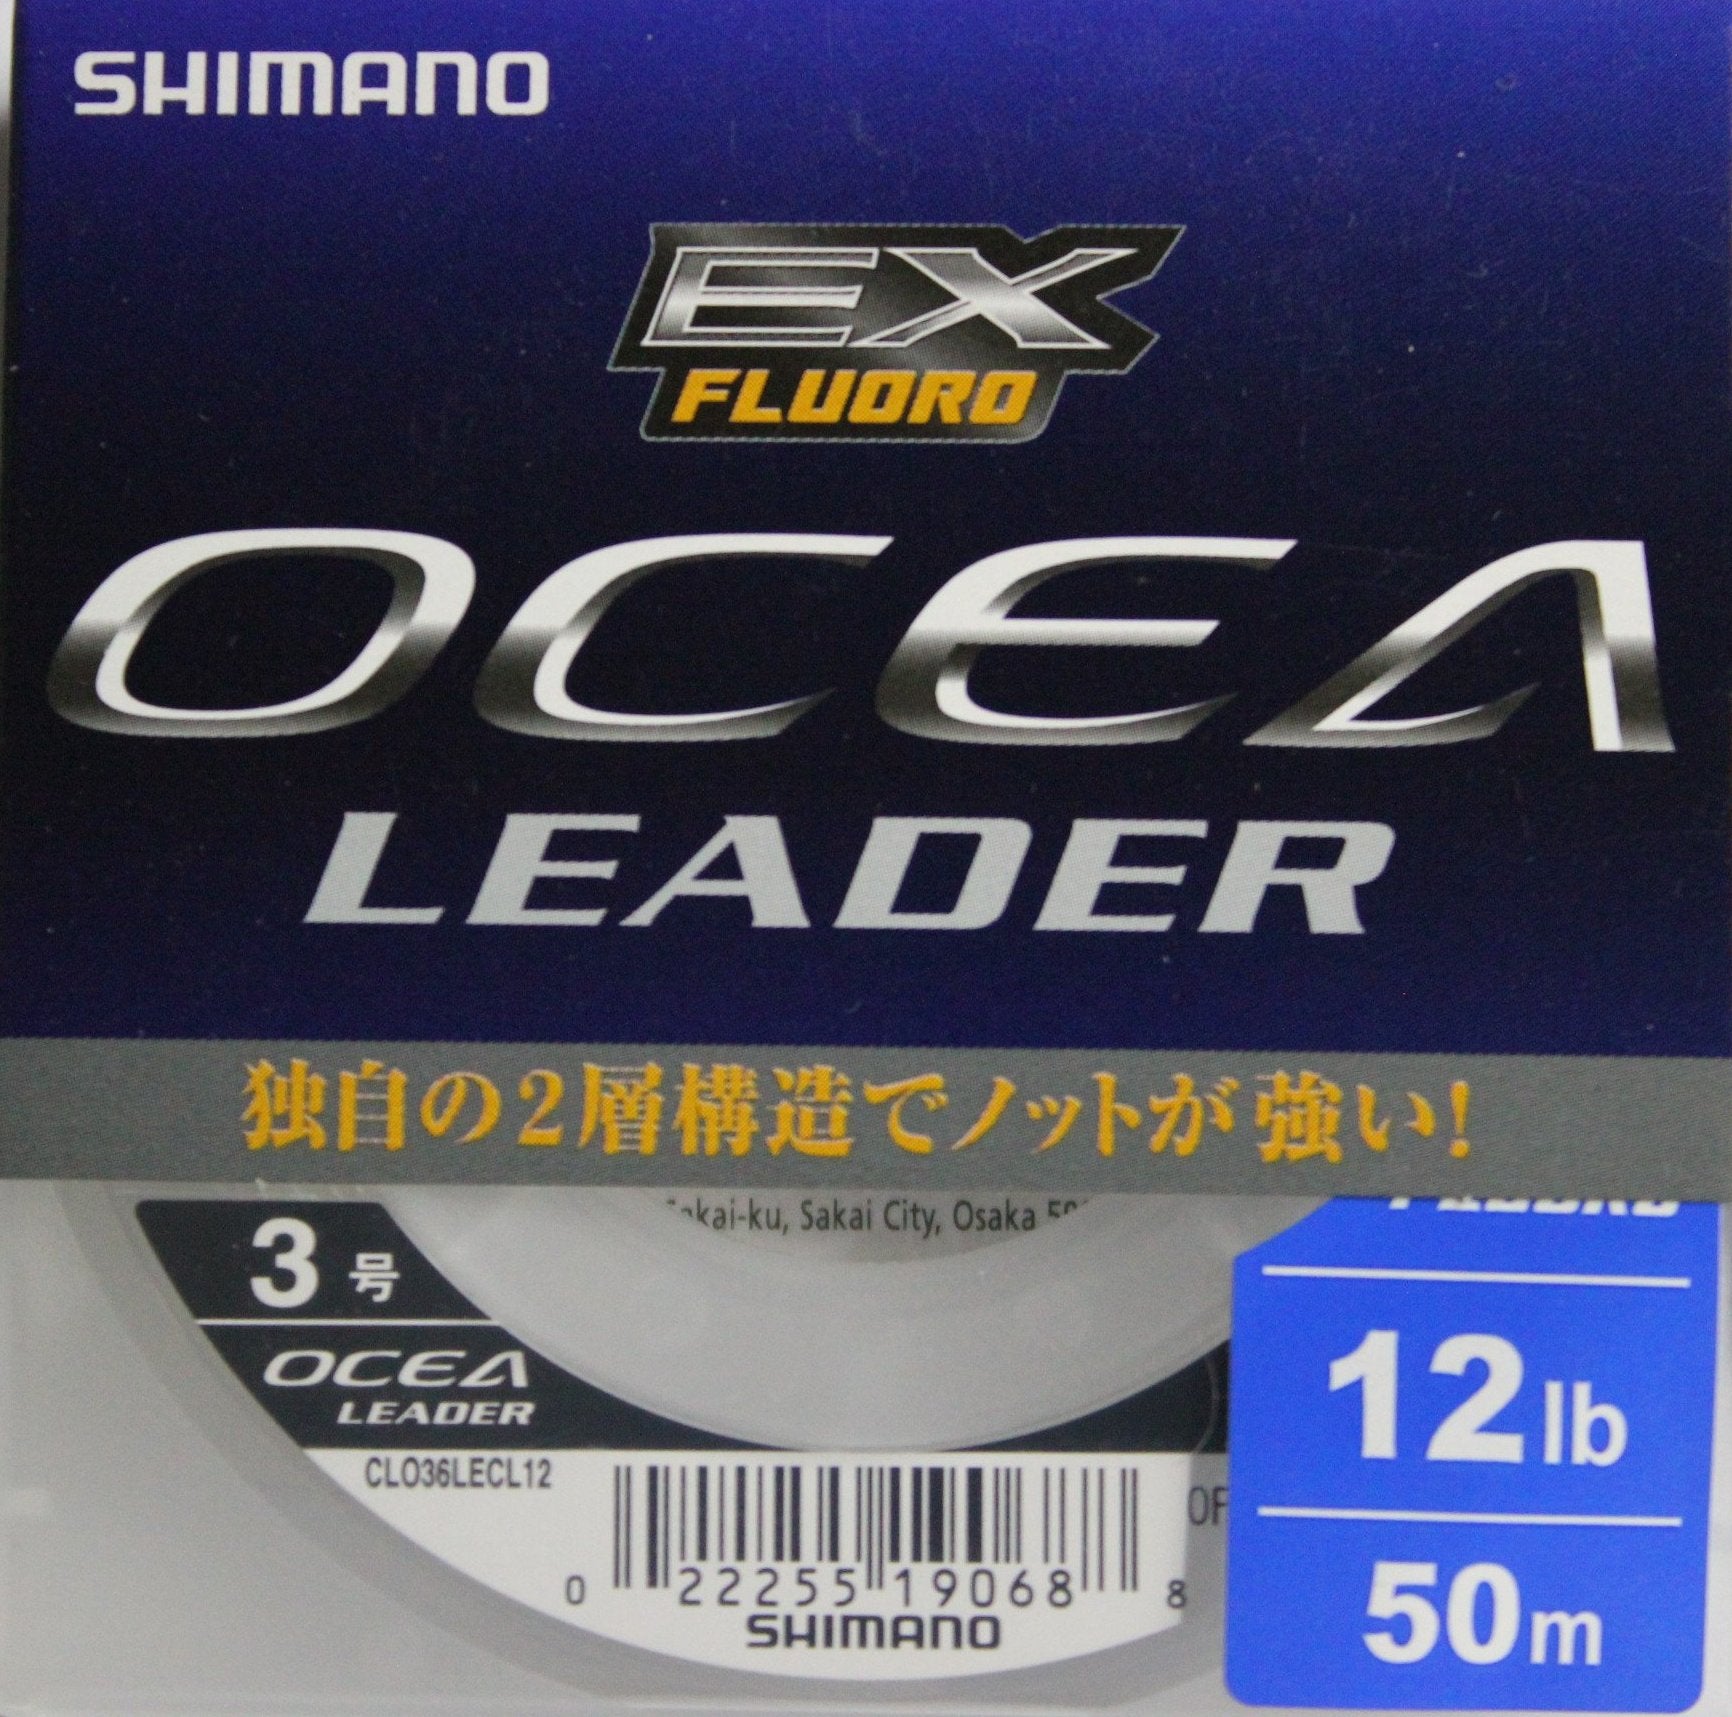 Shimano Ocea EX Leader 50m Fishing Line